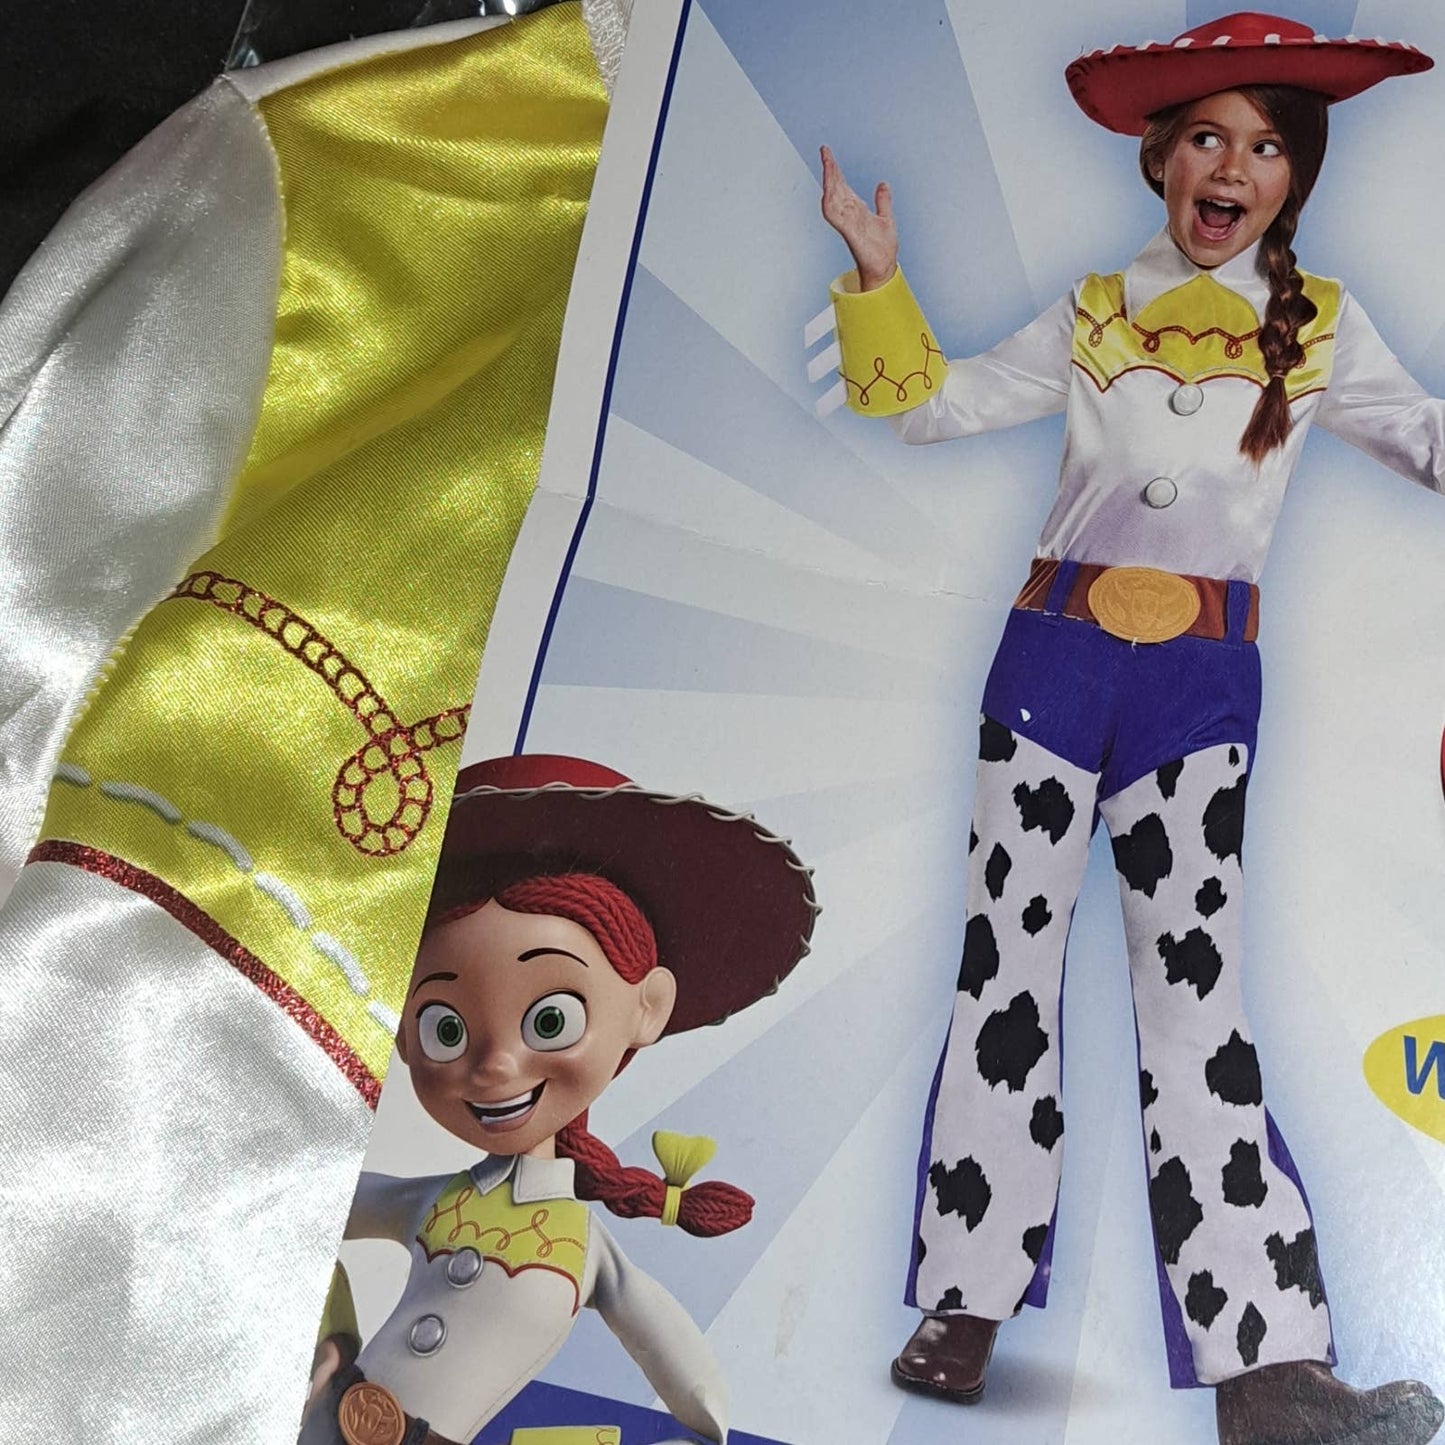 SALE! NWT - Toy Story Jesse Kids size M 8-10 with hat